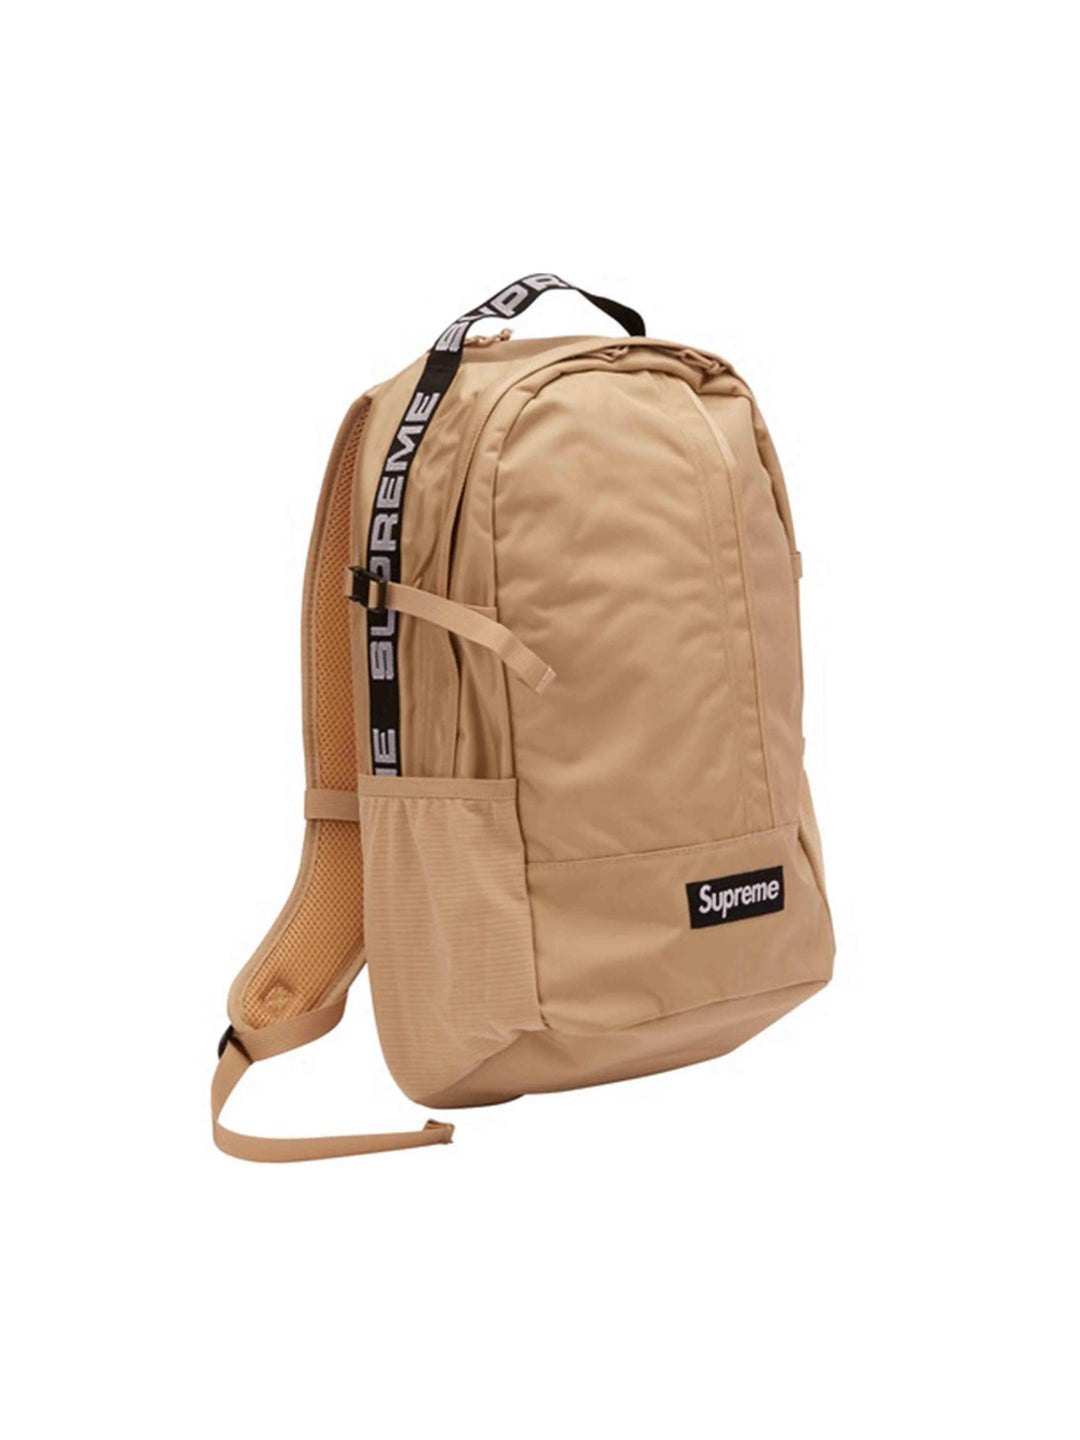 Supreme Backpack Tan [SS18] Supreme